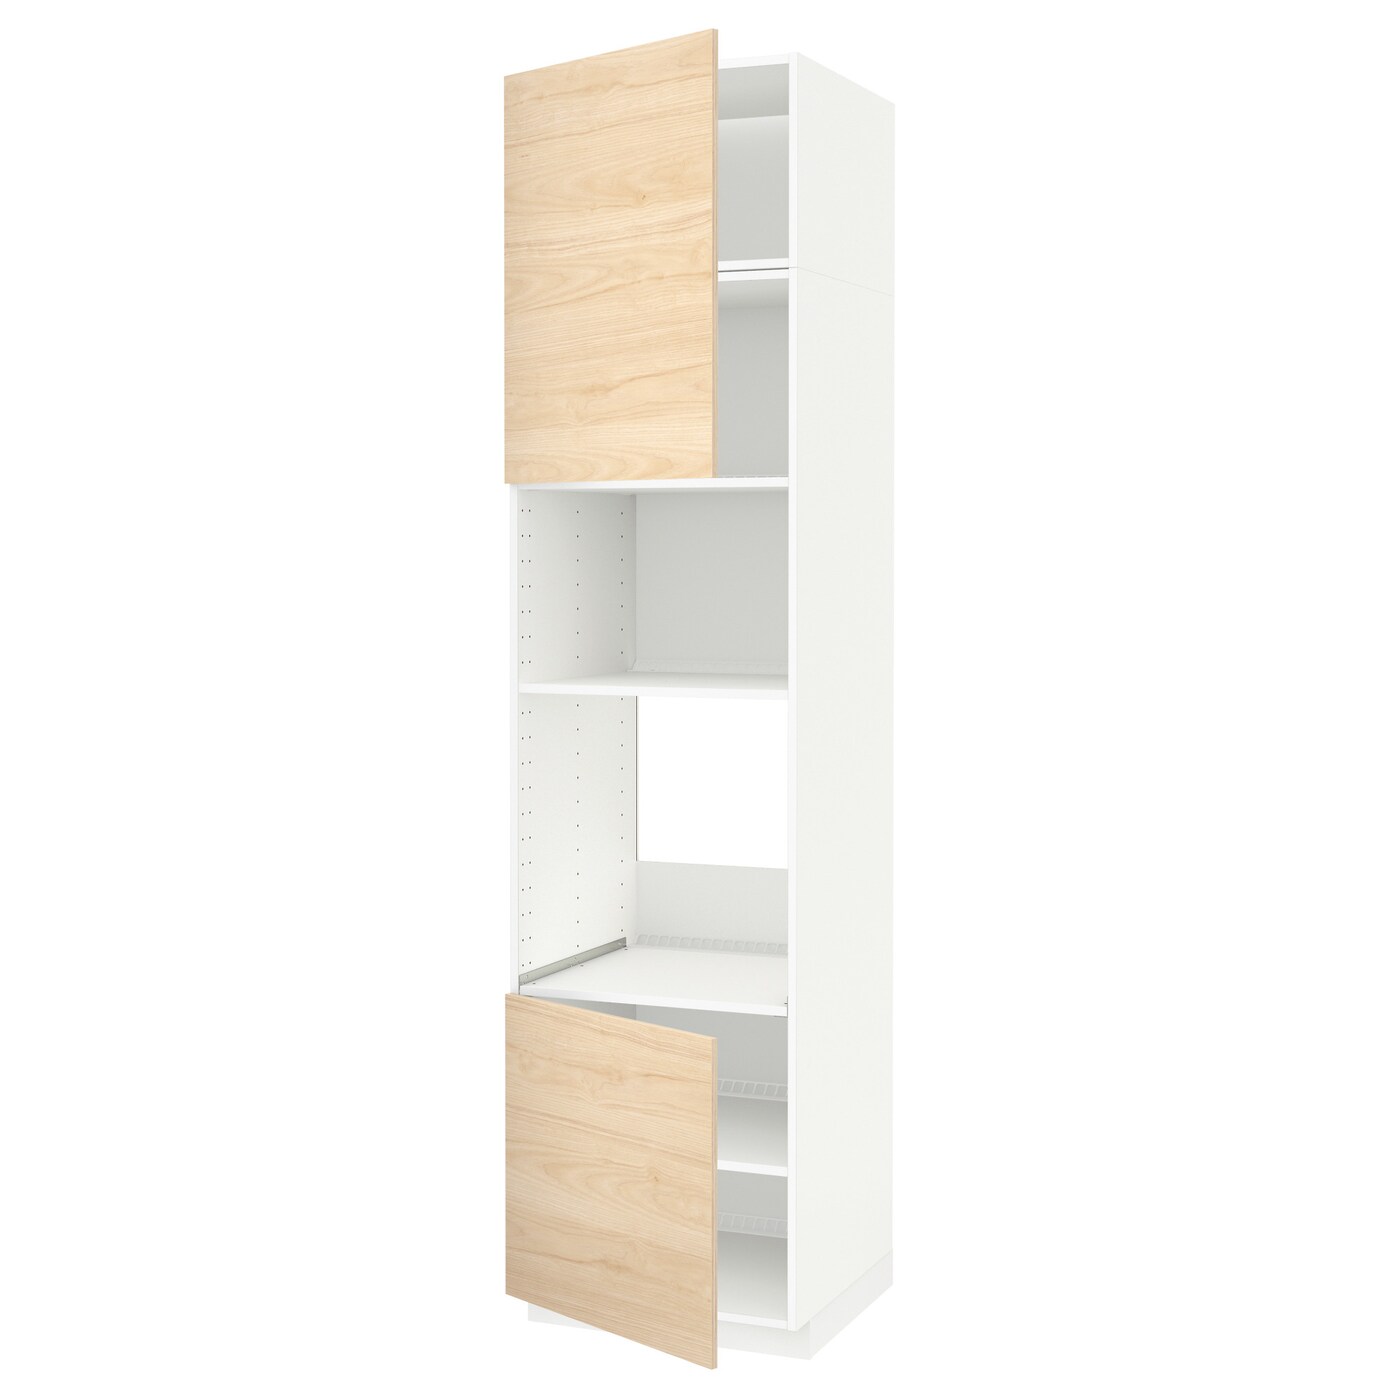 Кухонный шкаф-пенал - IKEA METOD/МЕТОД ИКЕА, 240х60х60 см, белый/под беленый дуб